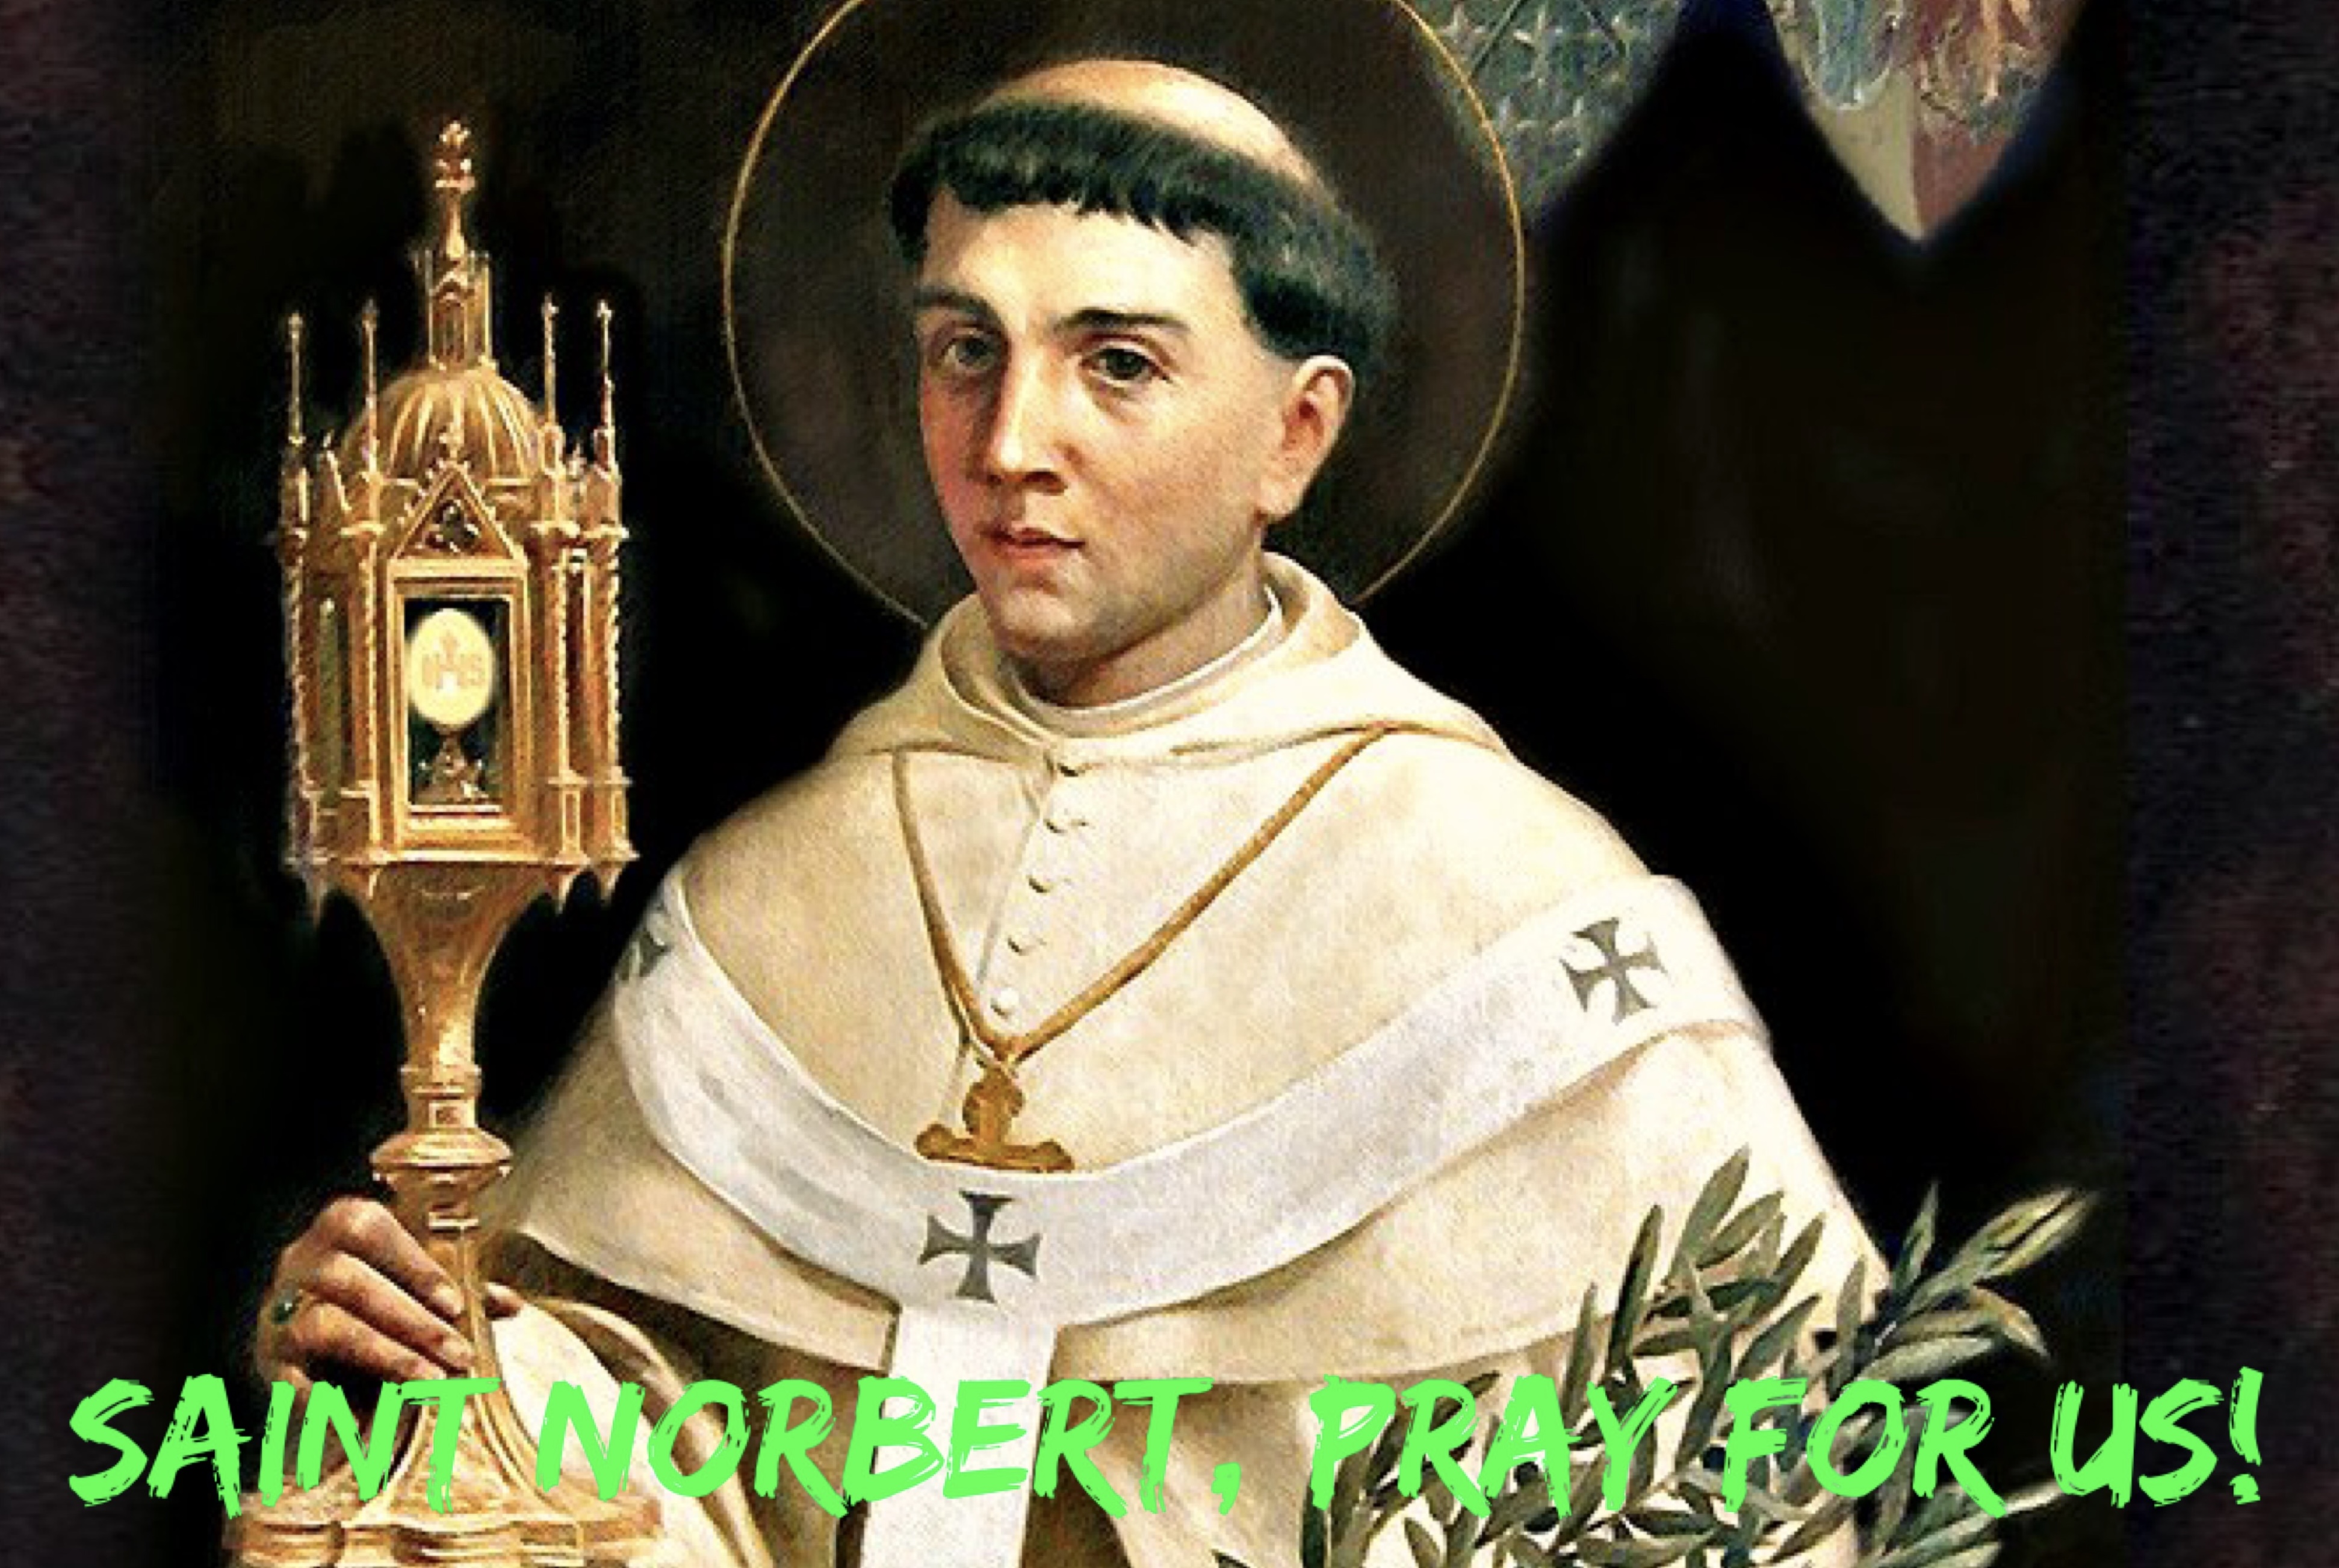 6th June – Saint Norbert